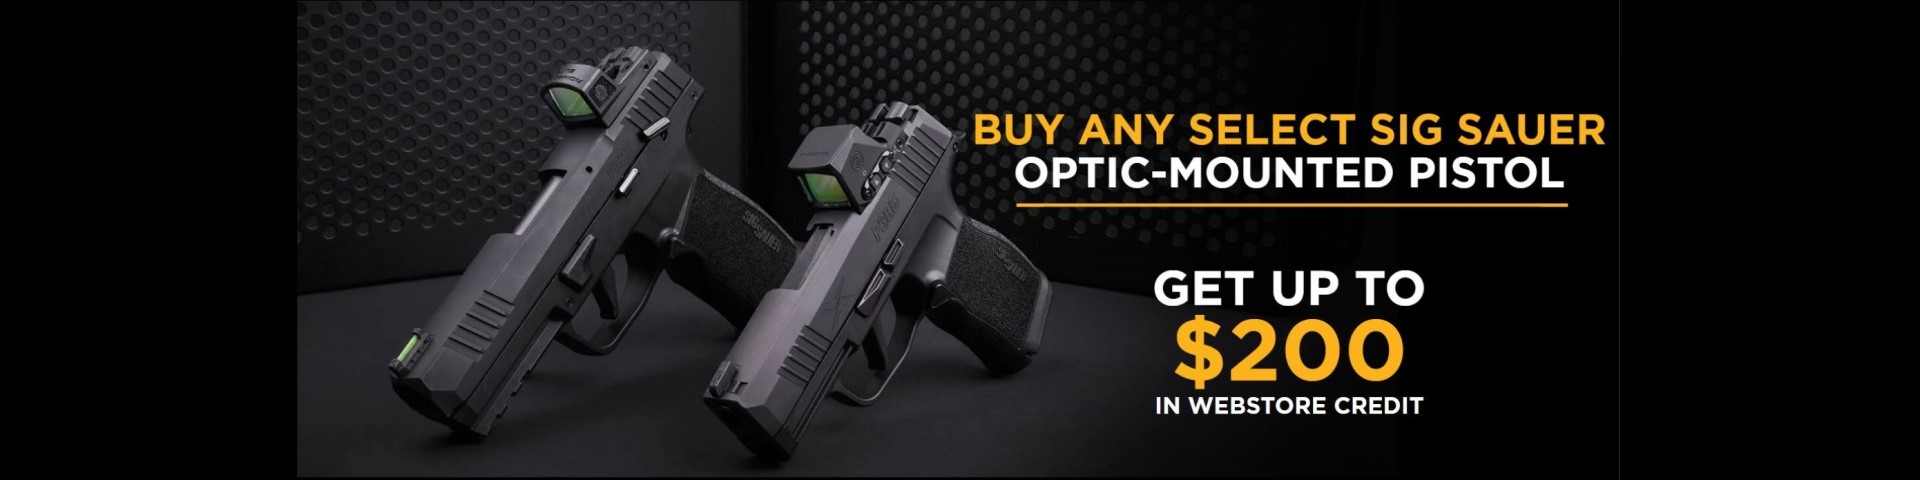 https://www.sigsauer.com/consumer-promotion-optic-mounted-pistol-2024